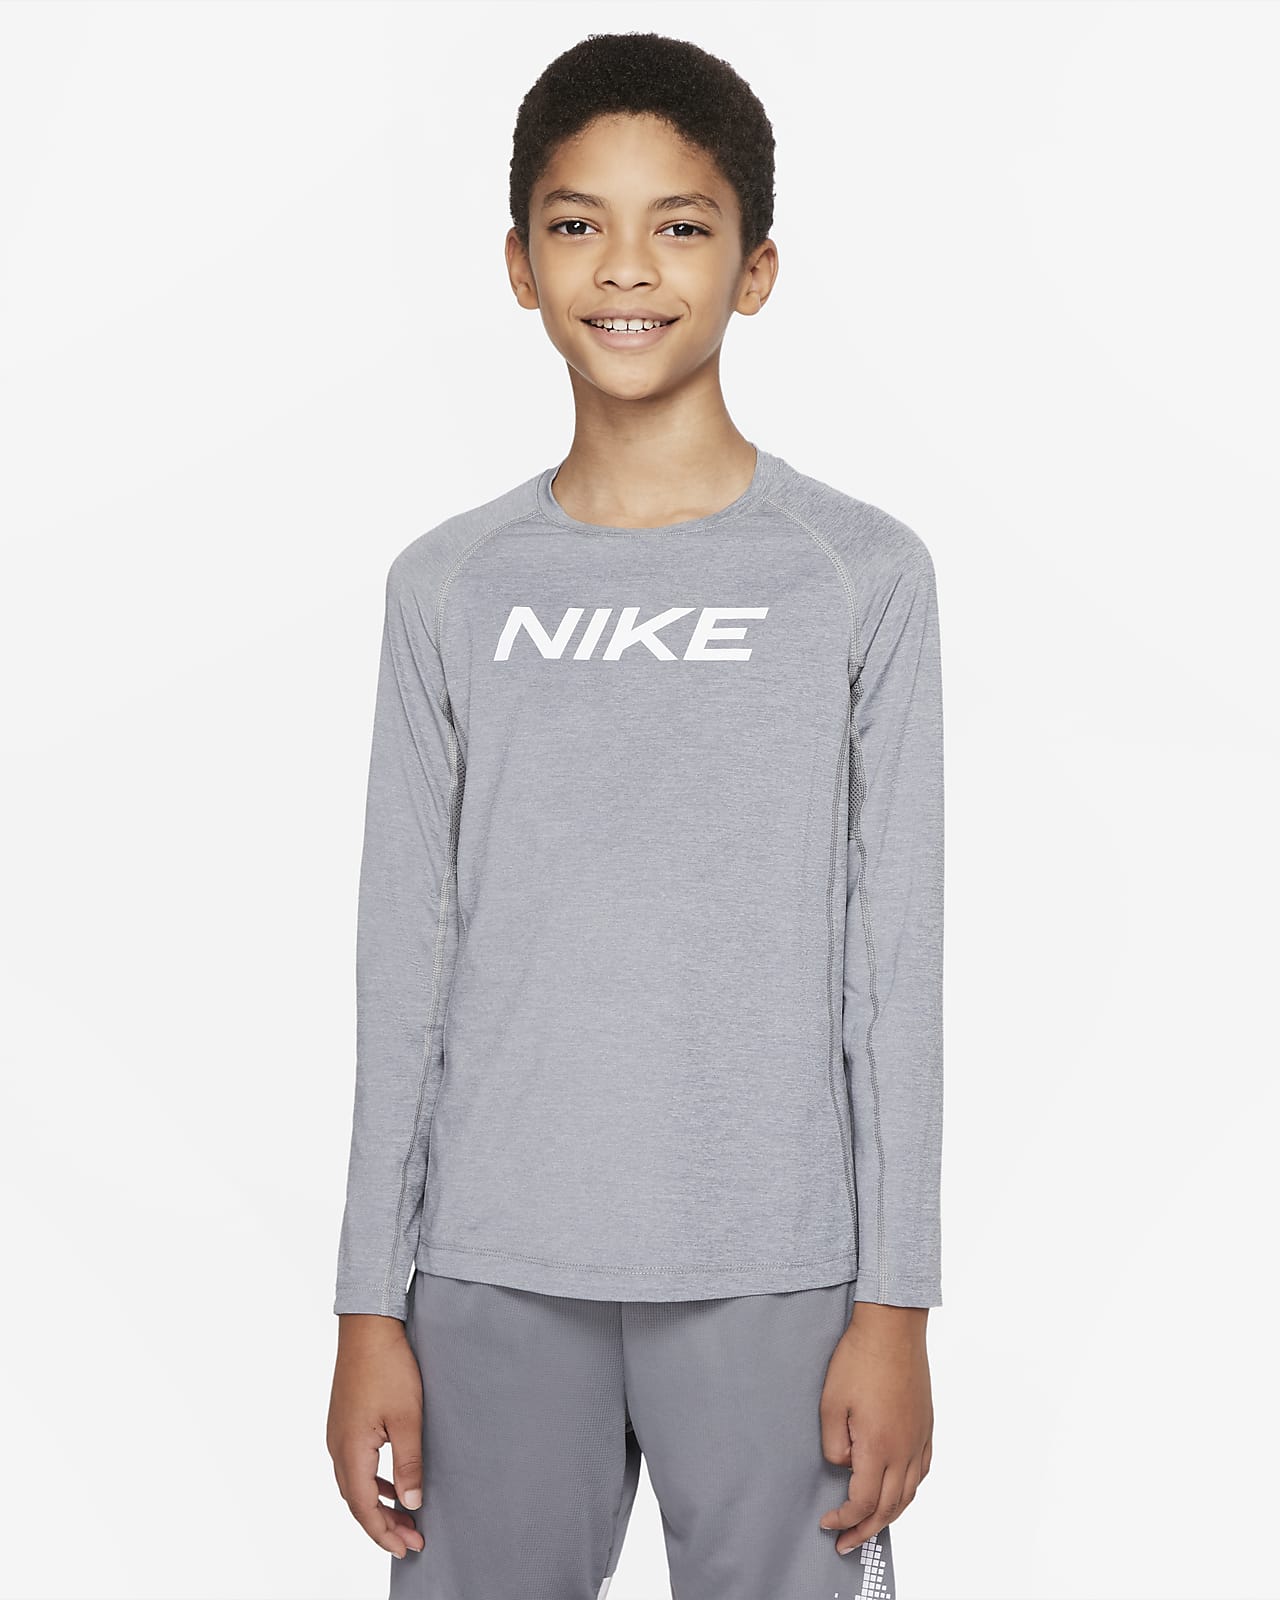 Långärmad tröja Nike Pro Dri-FIT för ungdom (killar)